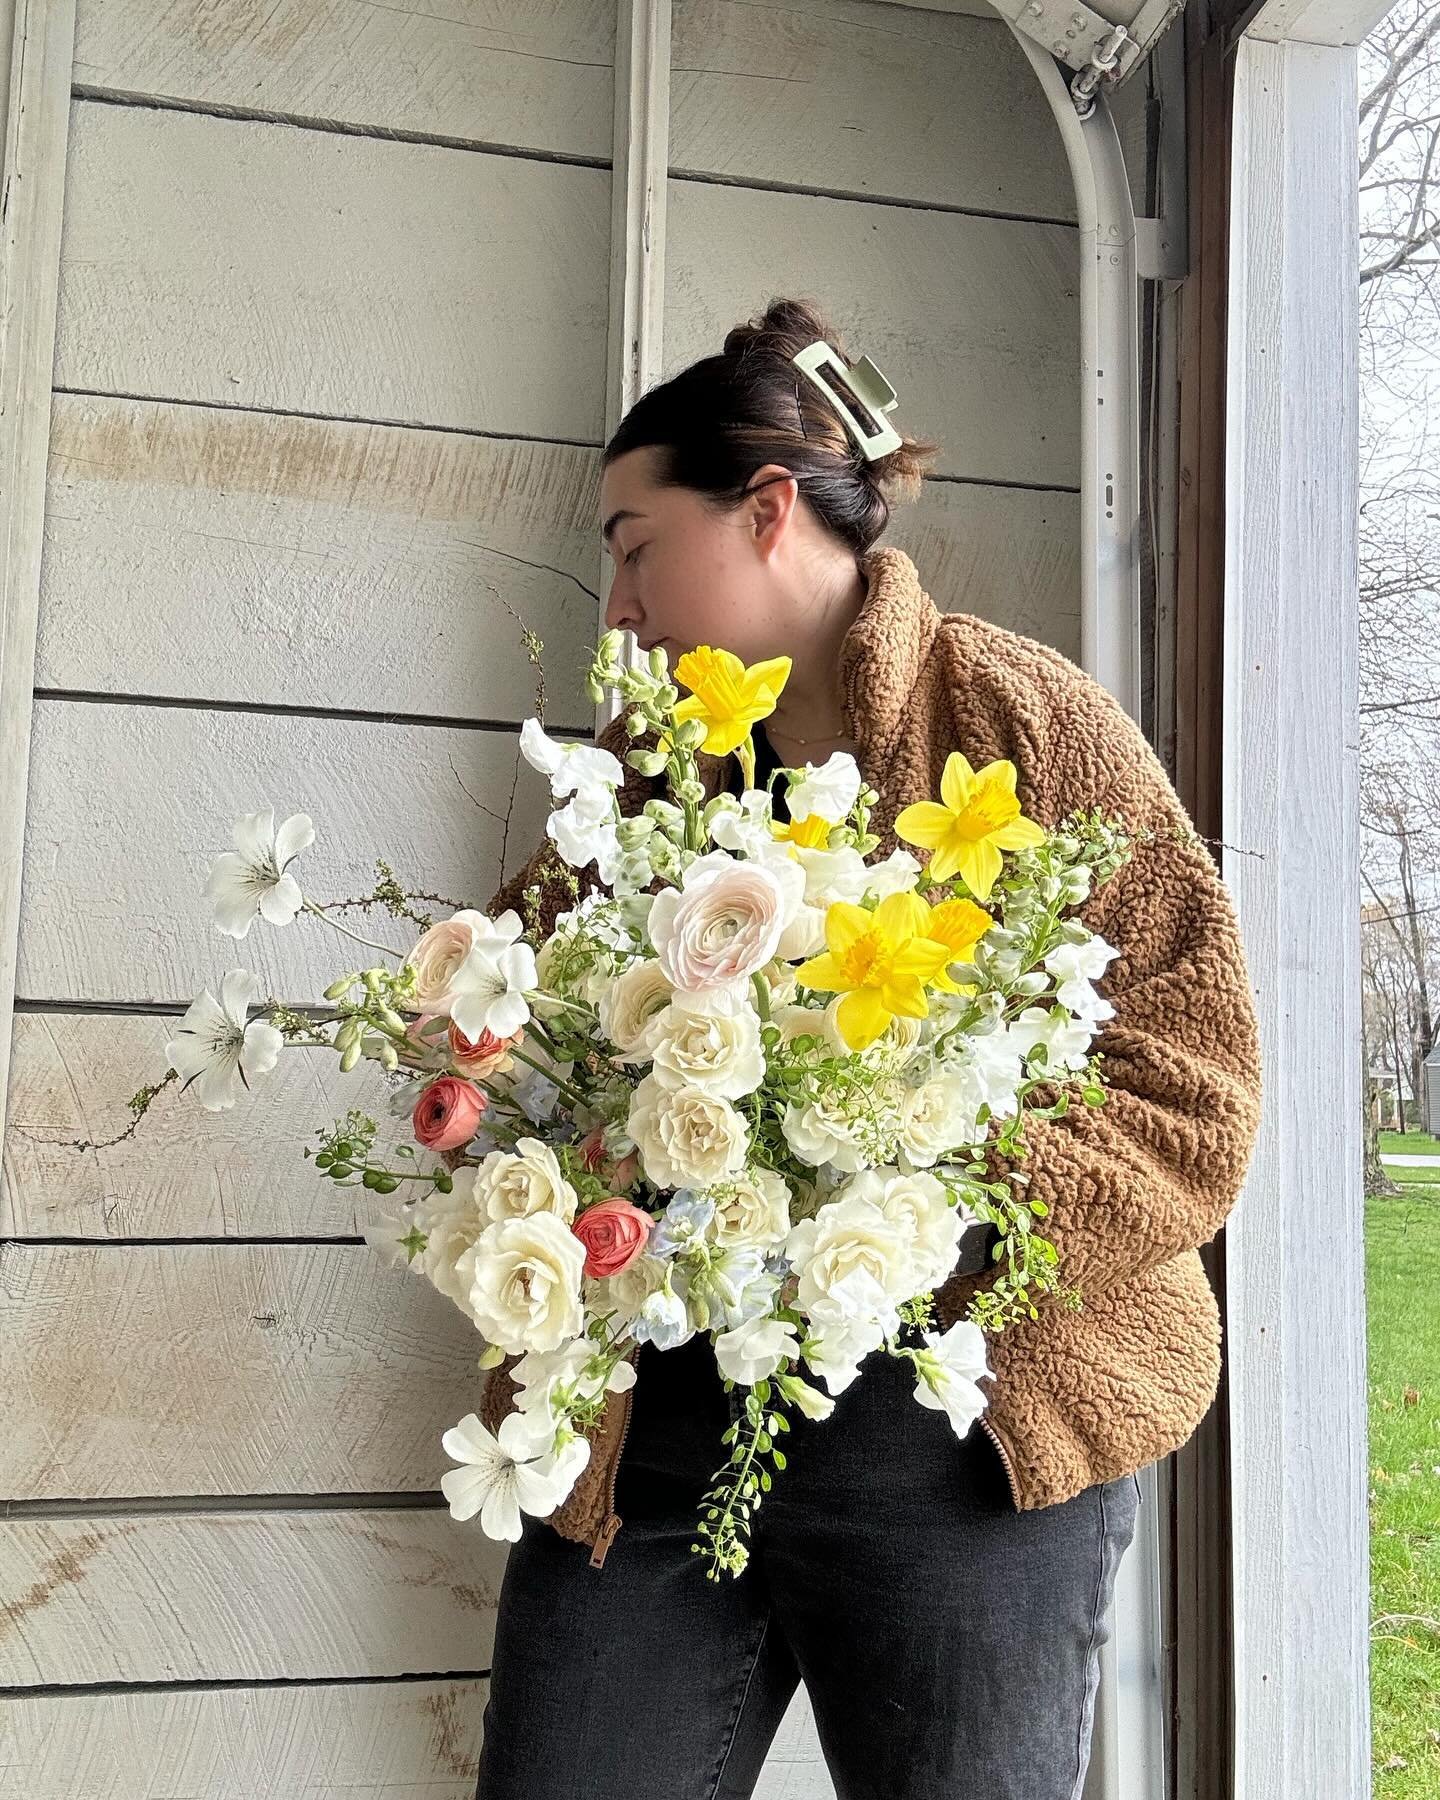 Spring by the handful 🐣

#michiganflorist #springflowers #michiganwedding #grandrapidsflorist #michiganflorist